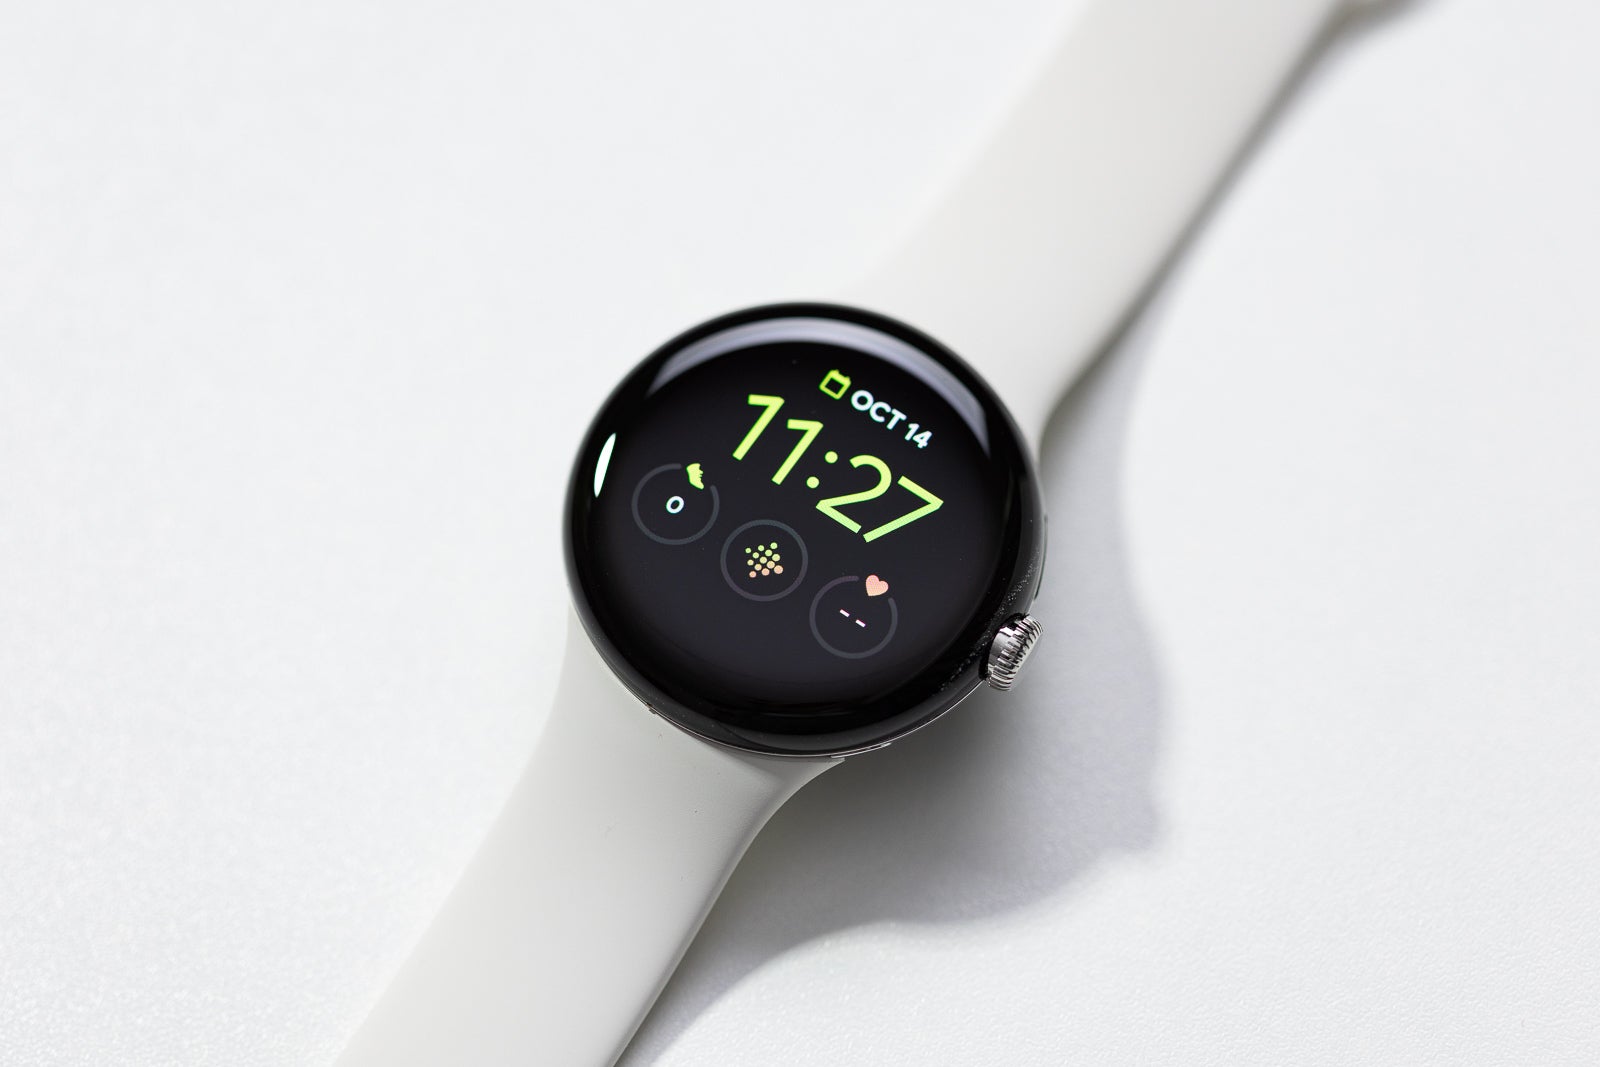 Menonaktifkan tampilan Always-on meningkatkan peluang Anda untuk mendapatkan masa pakai baterai sepanjang hari di Pixel Watch Anda - Google mengungkapkan cara menghitung masa pakai baterai 24 jam untuk Pixel Watch